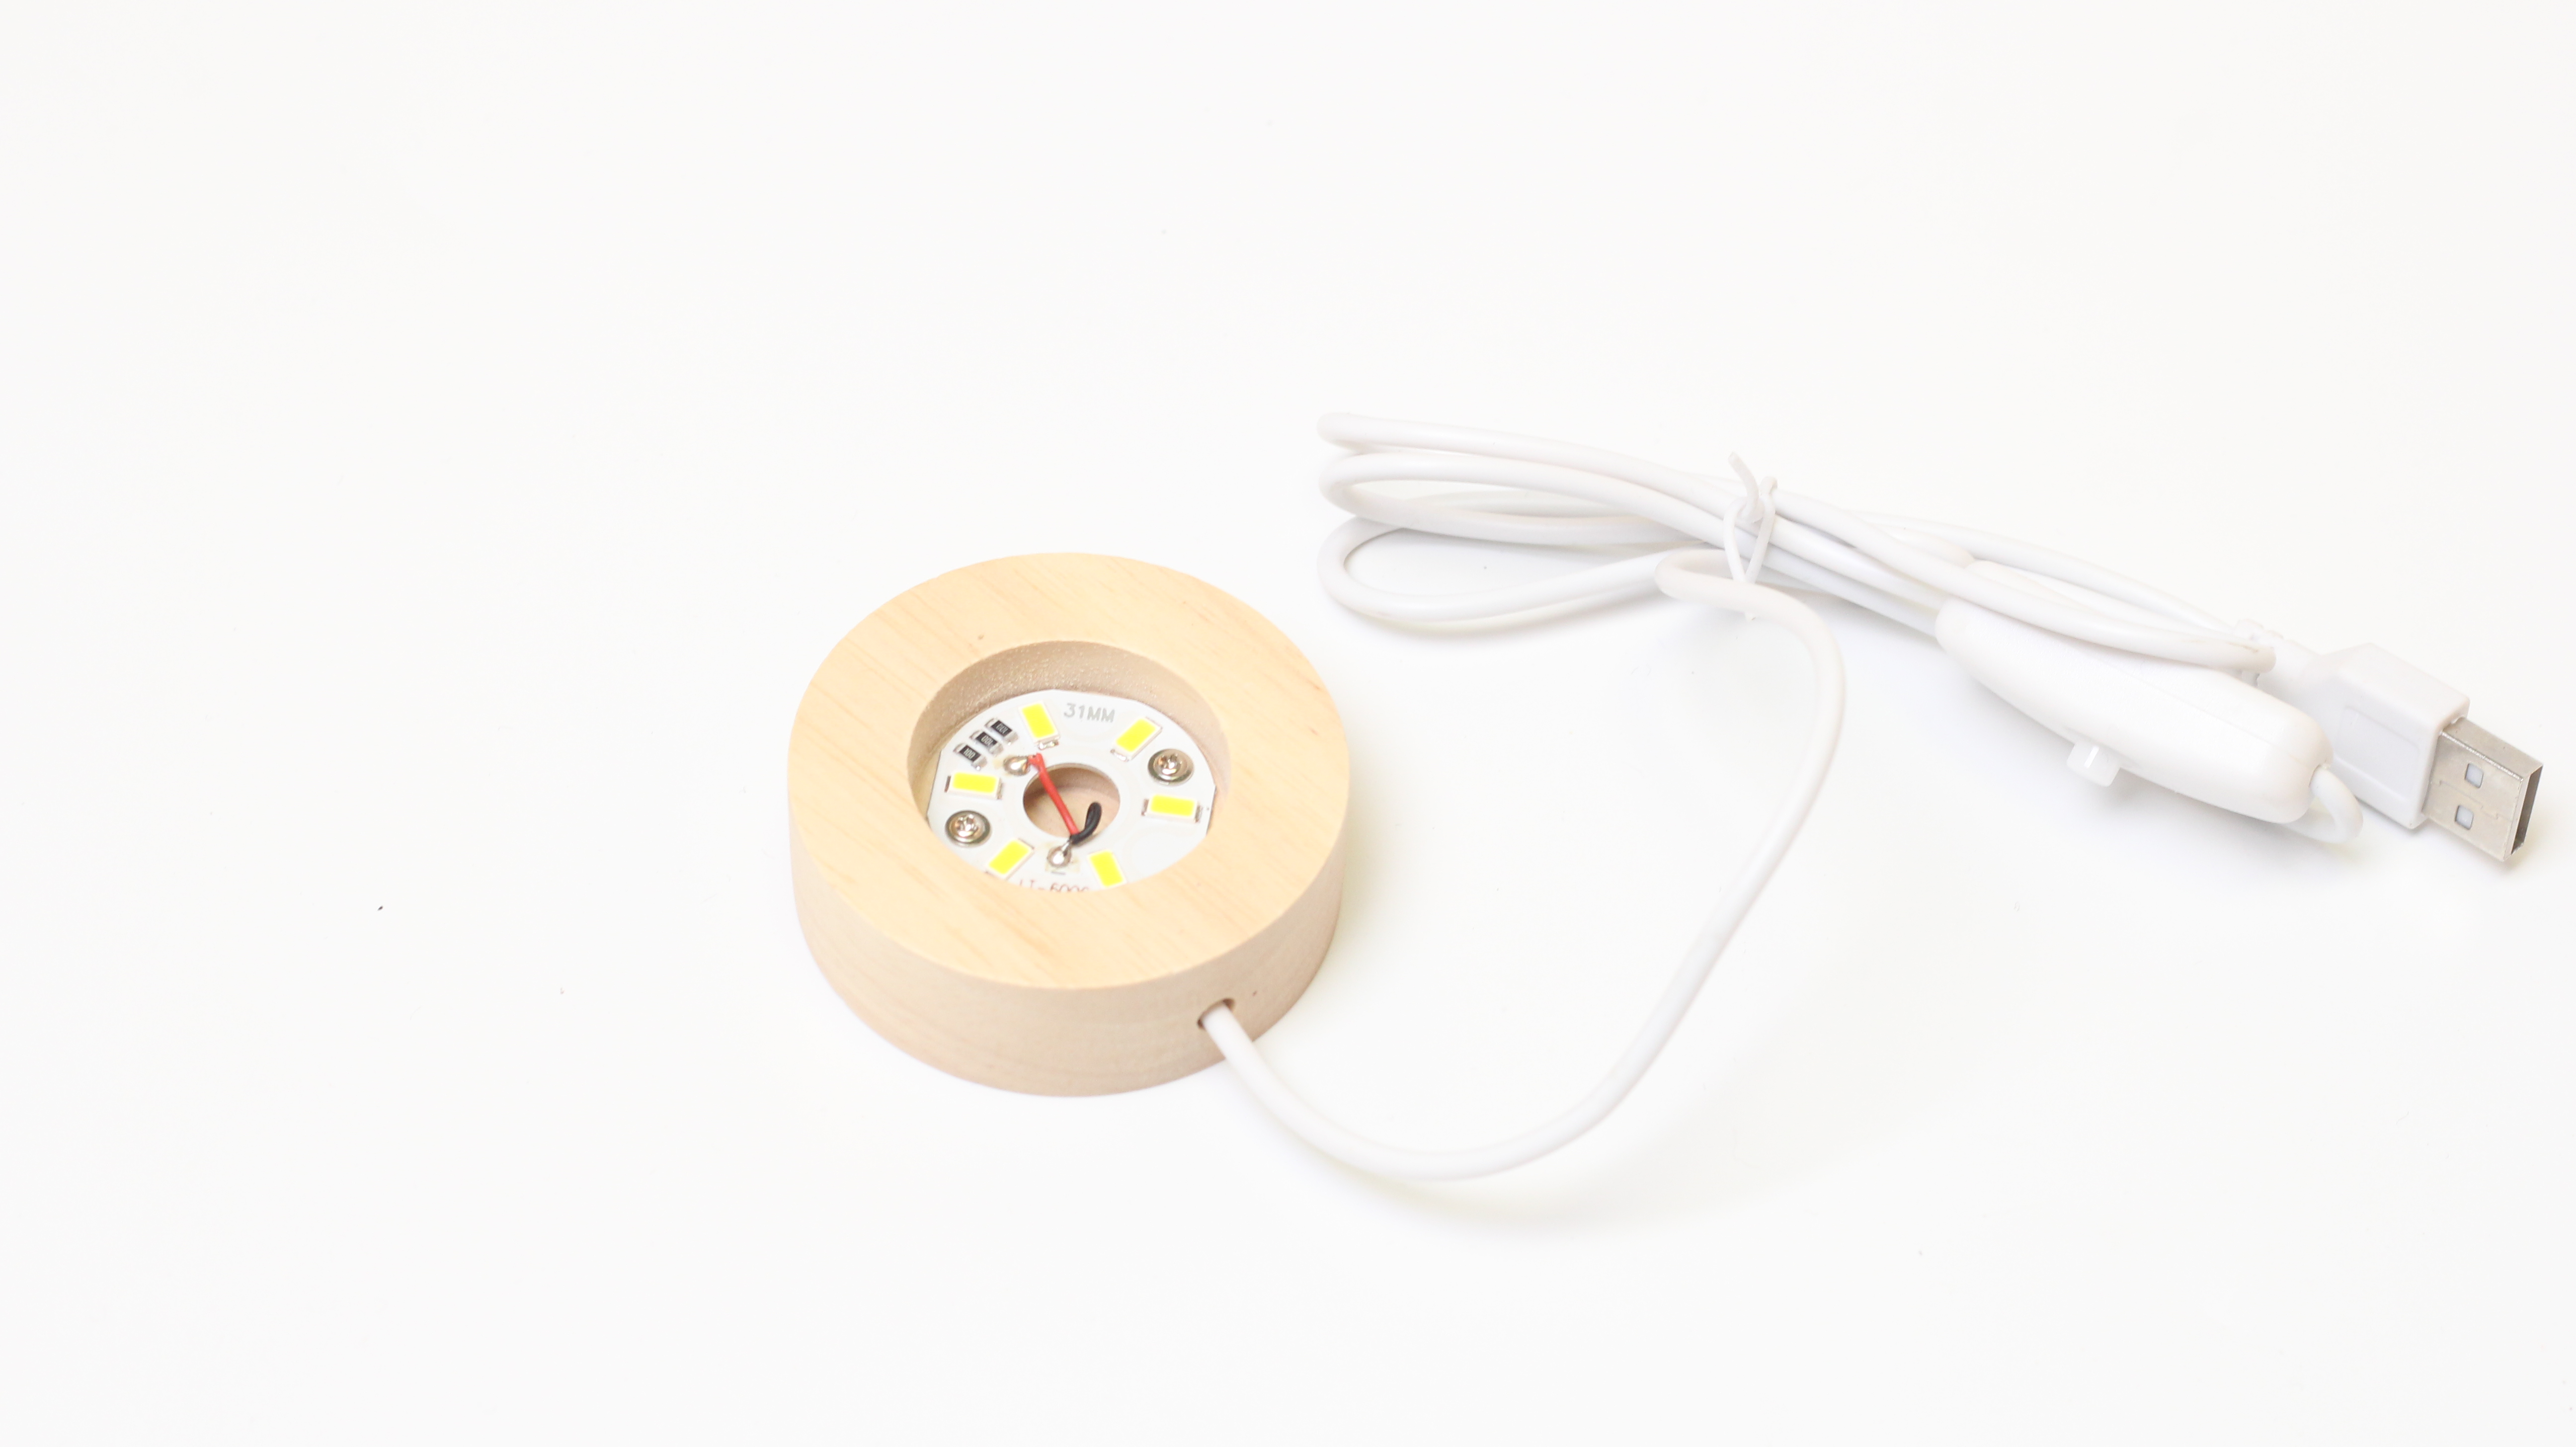 S Wooden LED crystal round lamp holder